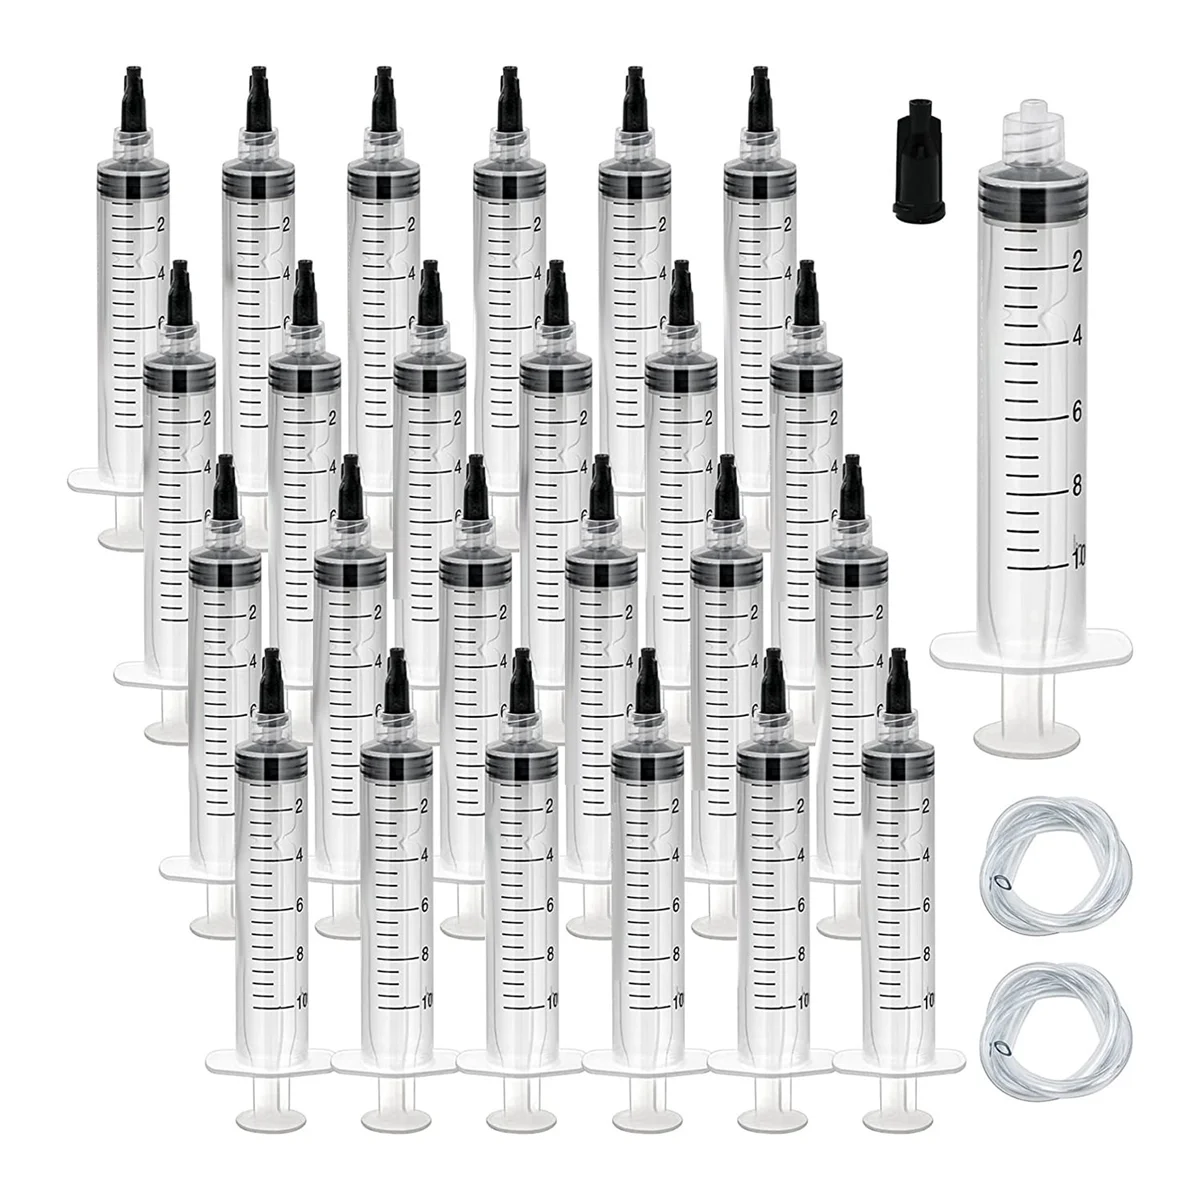 

30 Pack 10ML Plastic Syringe Sterile Individual Wrap(No Needle) Measurement for Scientific Labs,Measuring Liquids